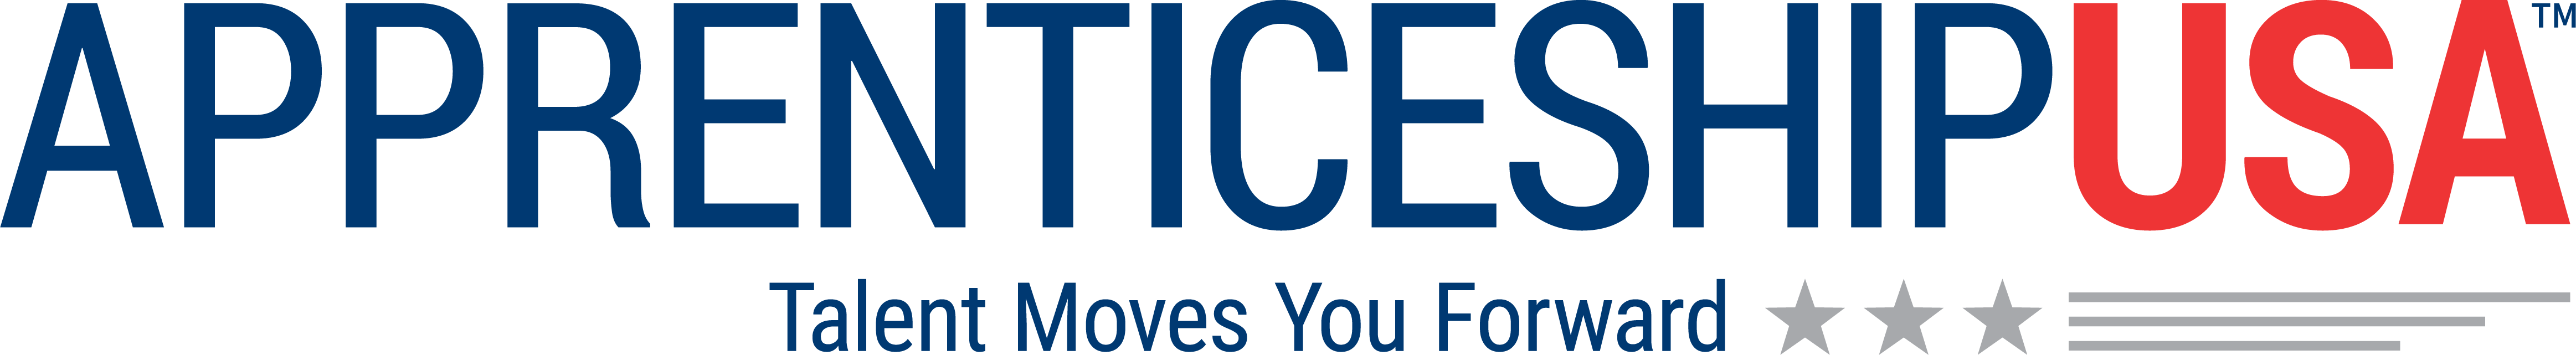 ApprenticeshipUSA Logo With Tagline